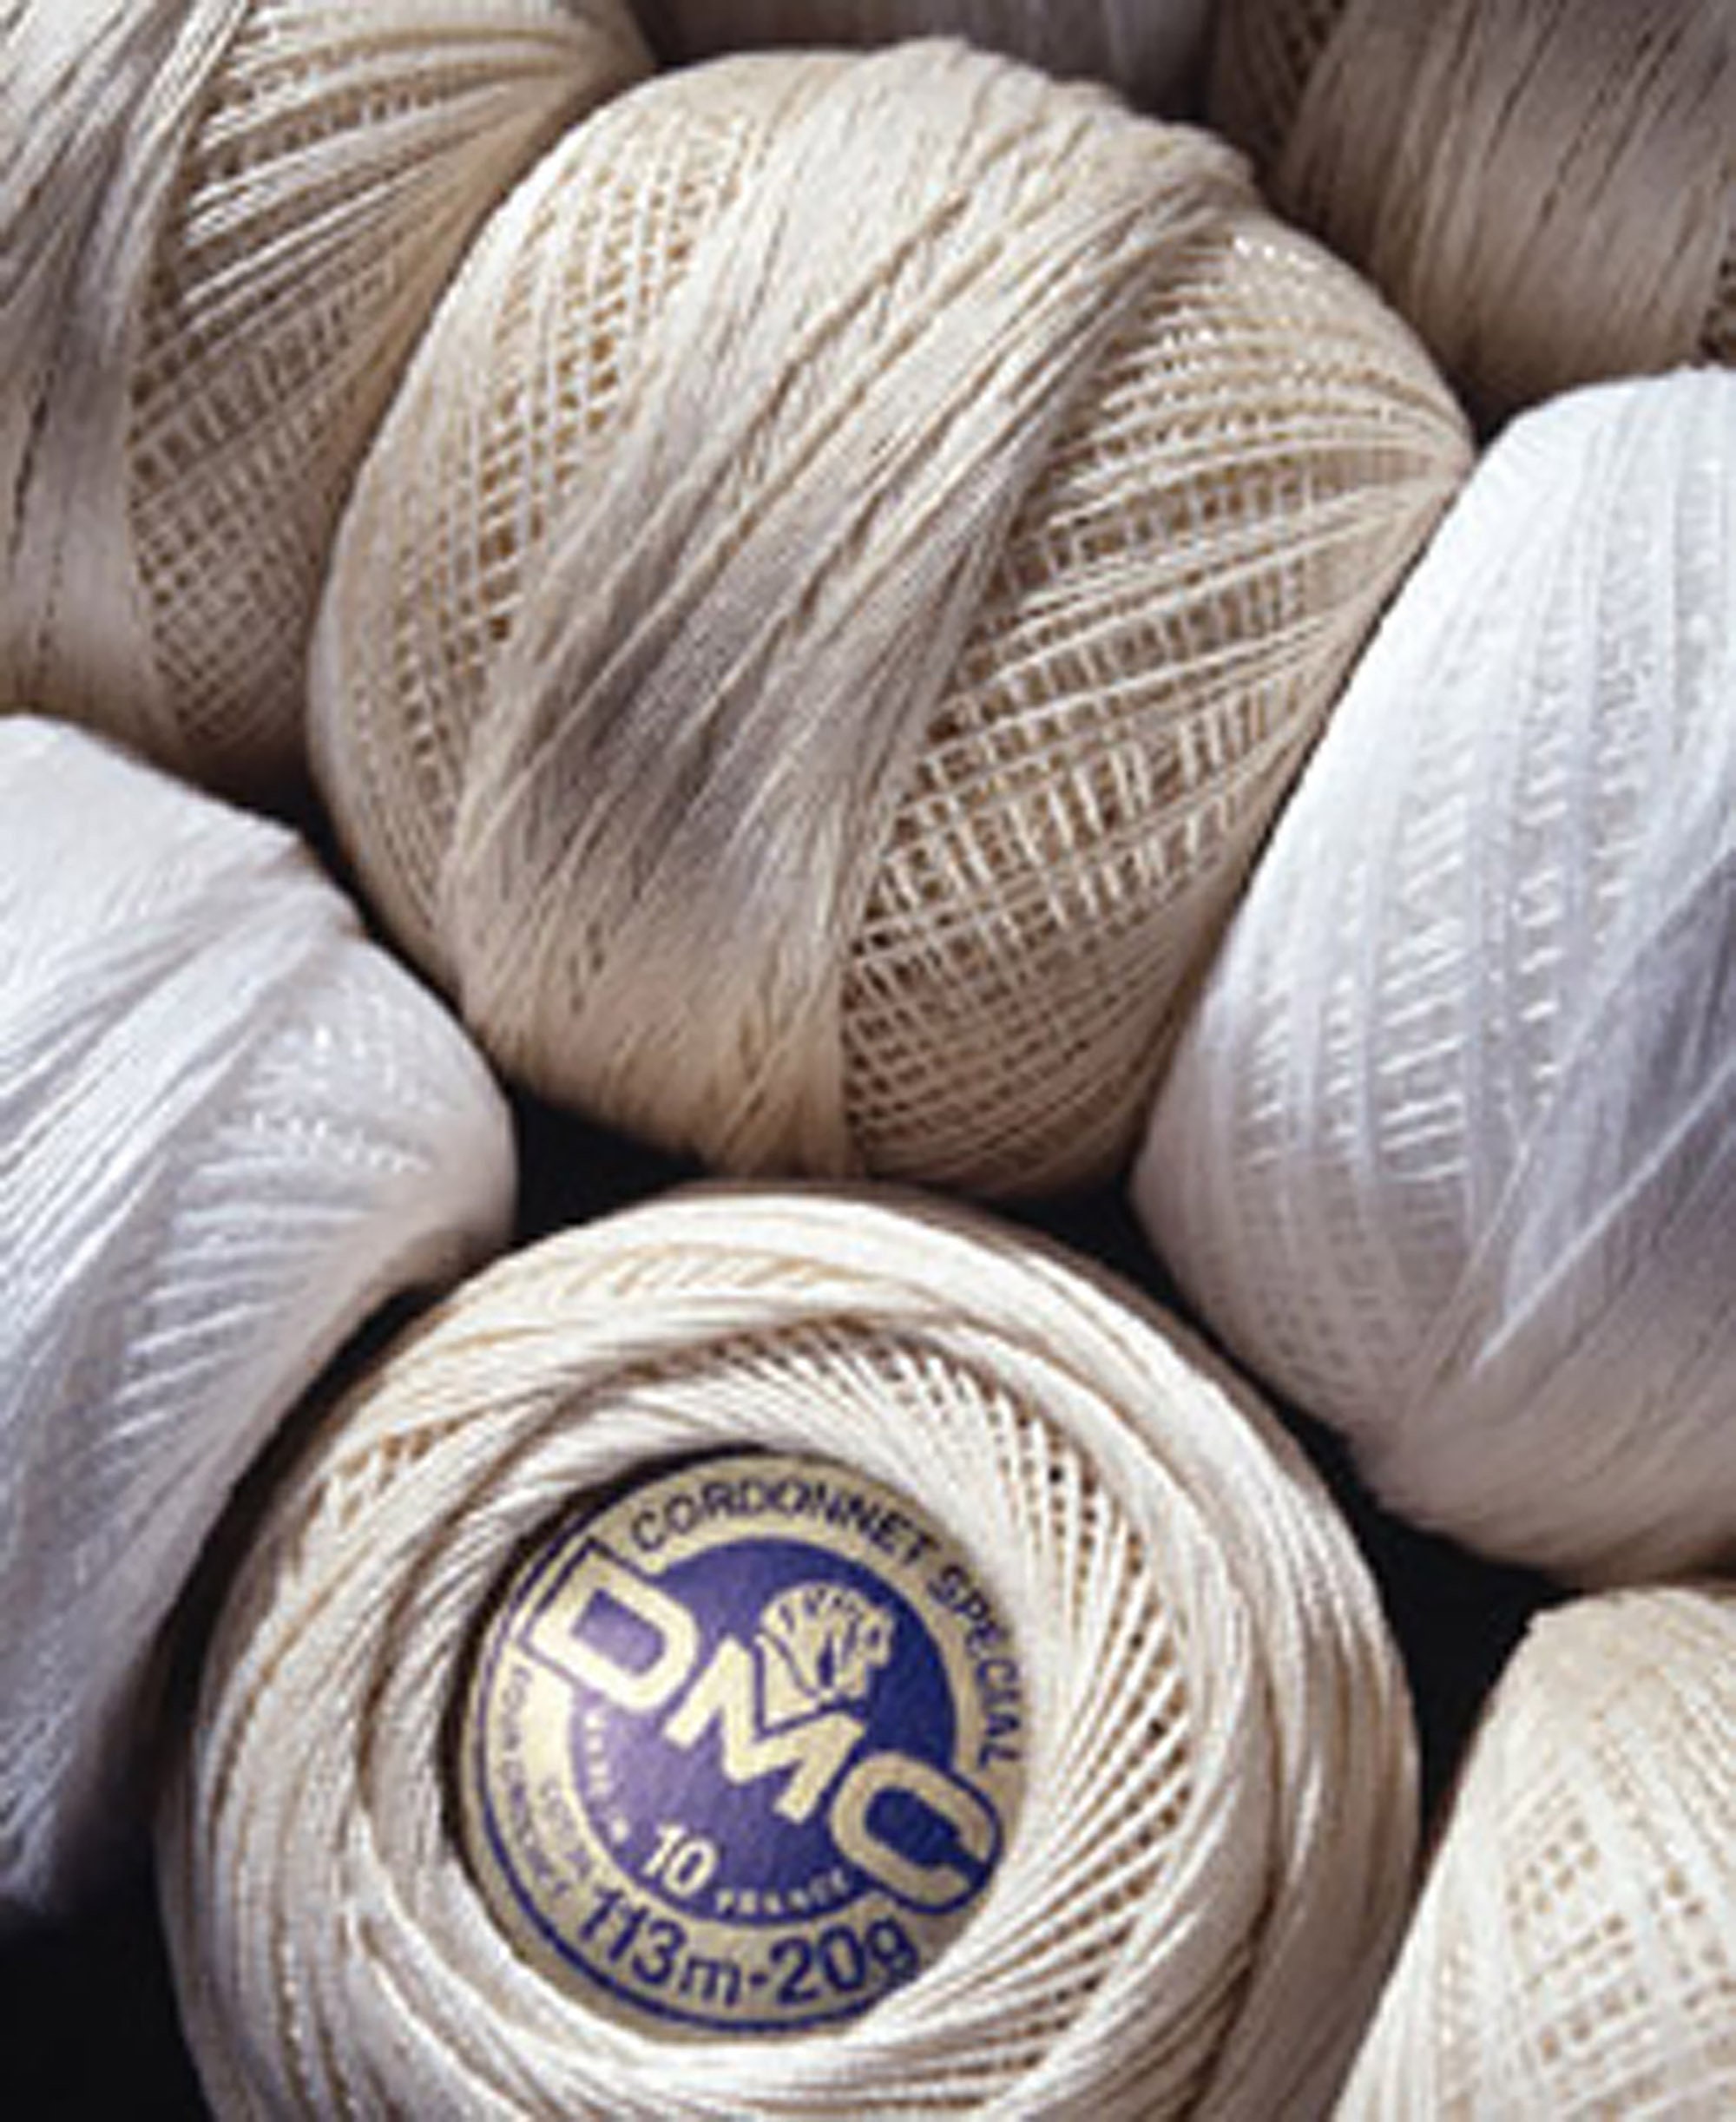 1 Ball Size 80 DMC Cordonnet Special White Ecru Crochet Cotton